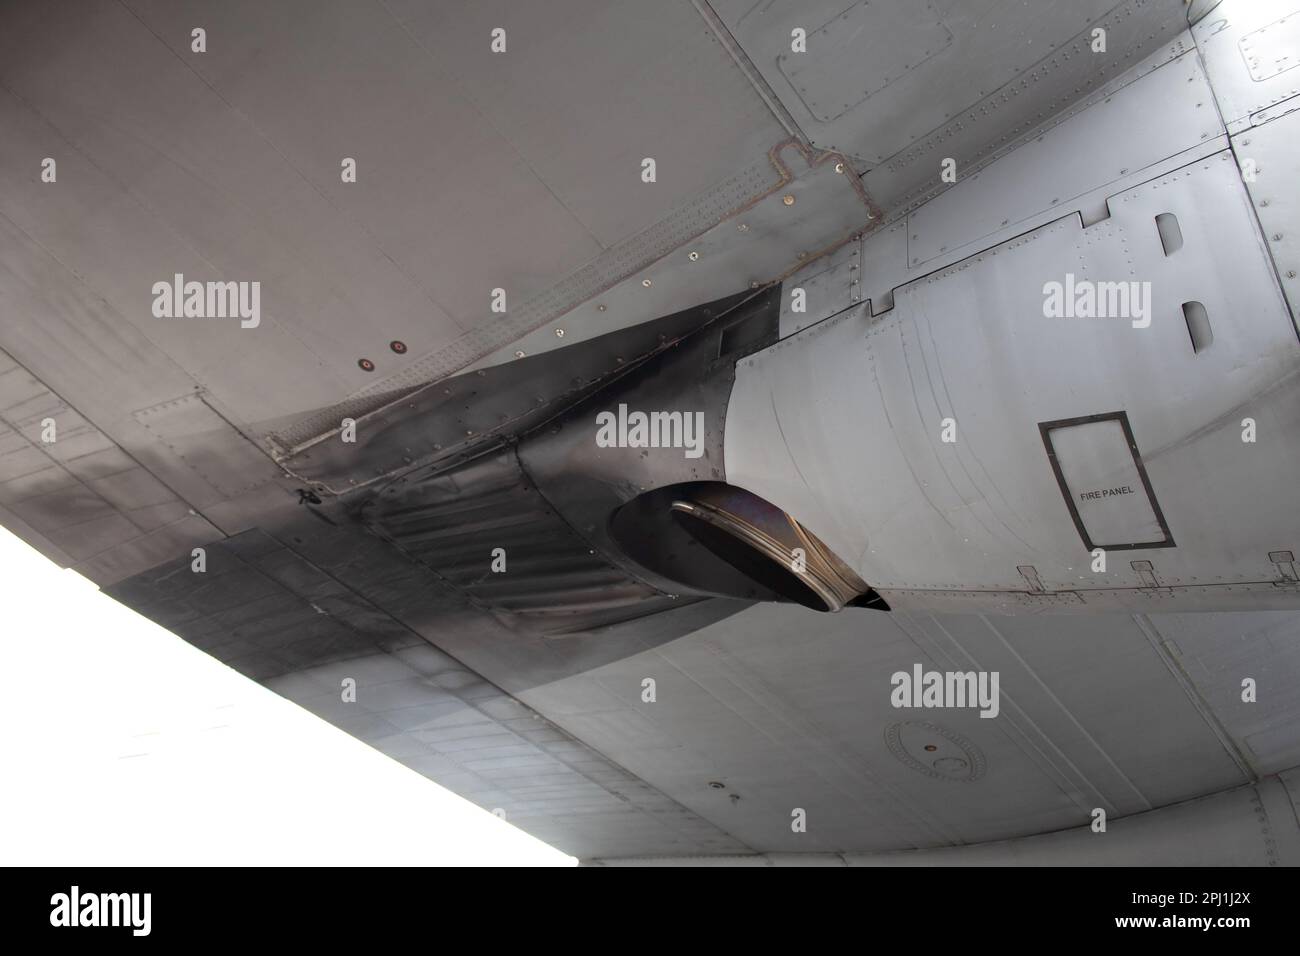 C-17 wing underside Stock Photo